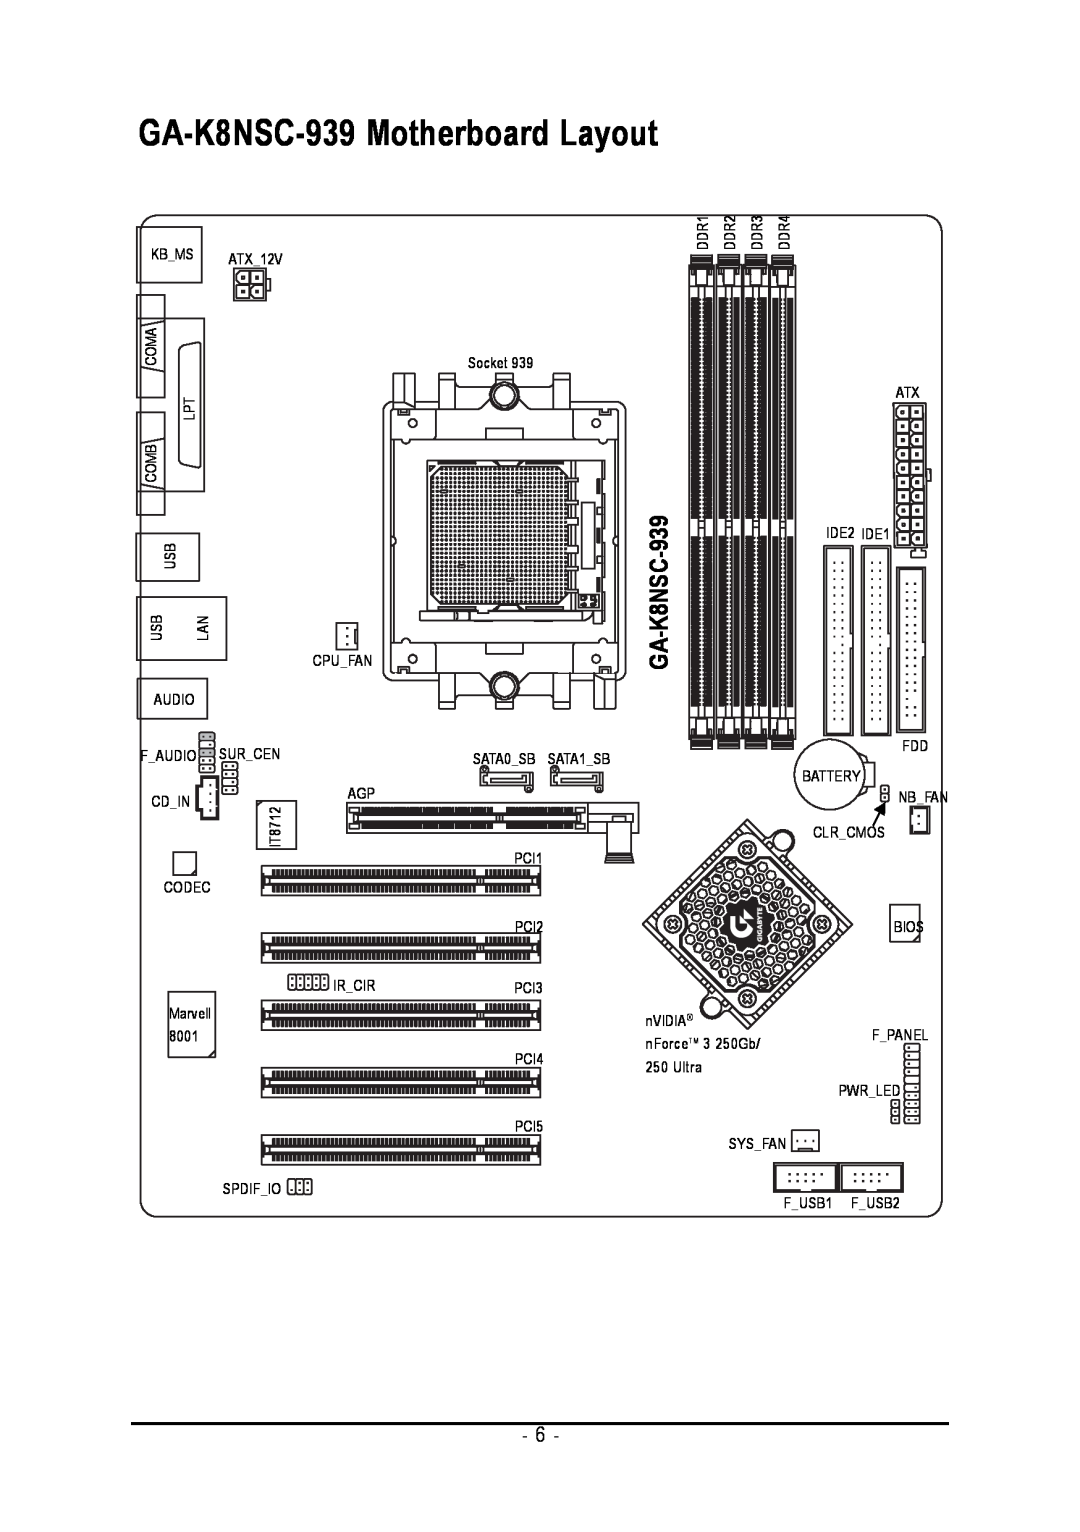 AMD user manual GA-K8NSC-939 Motherboard Layout, 939-K8NSC-GA 